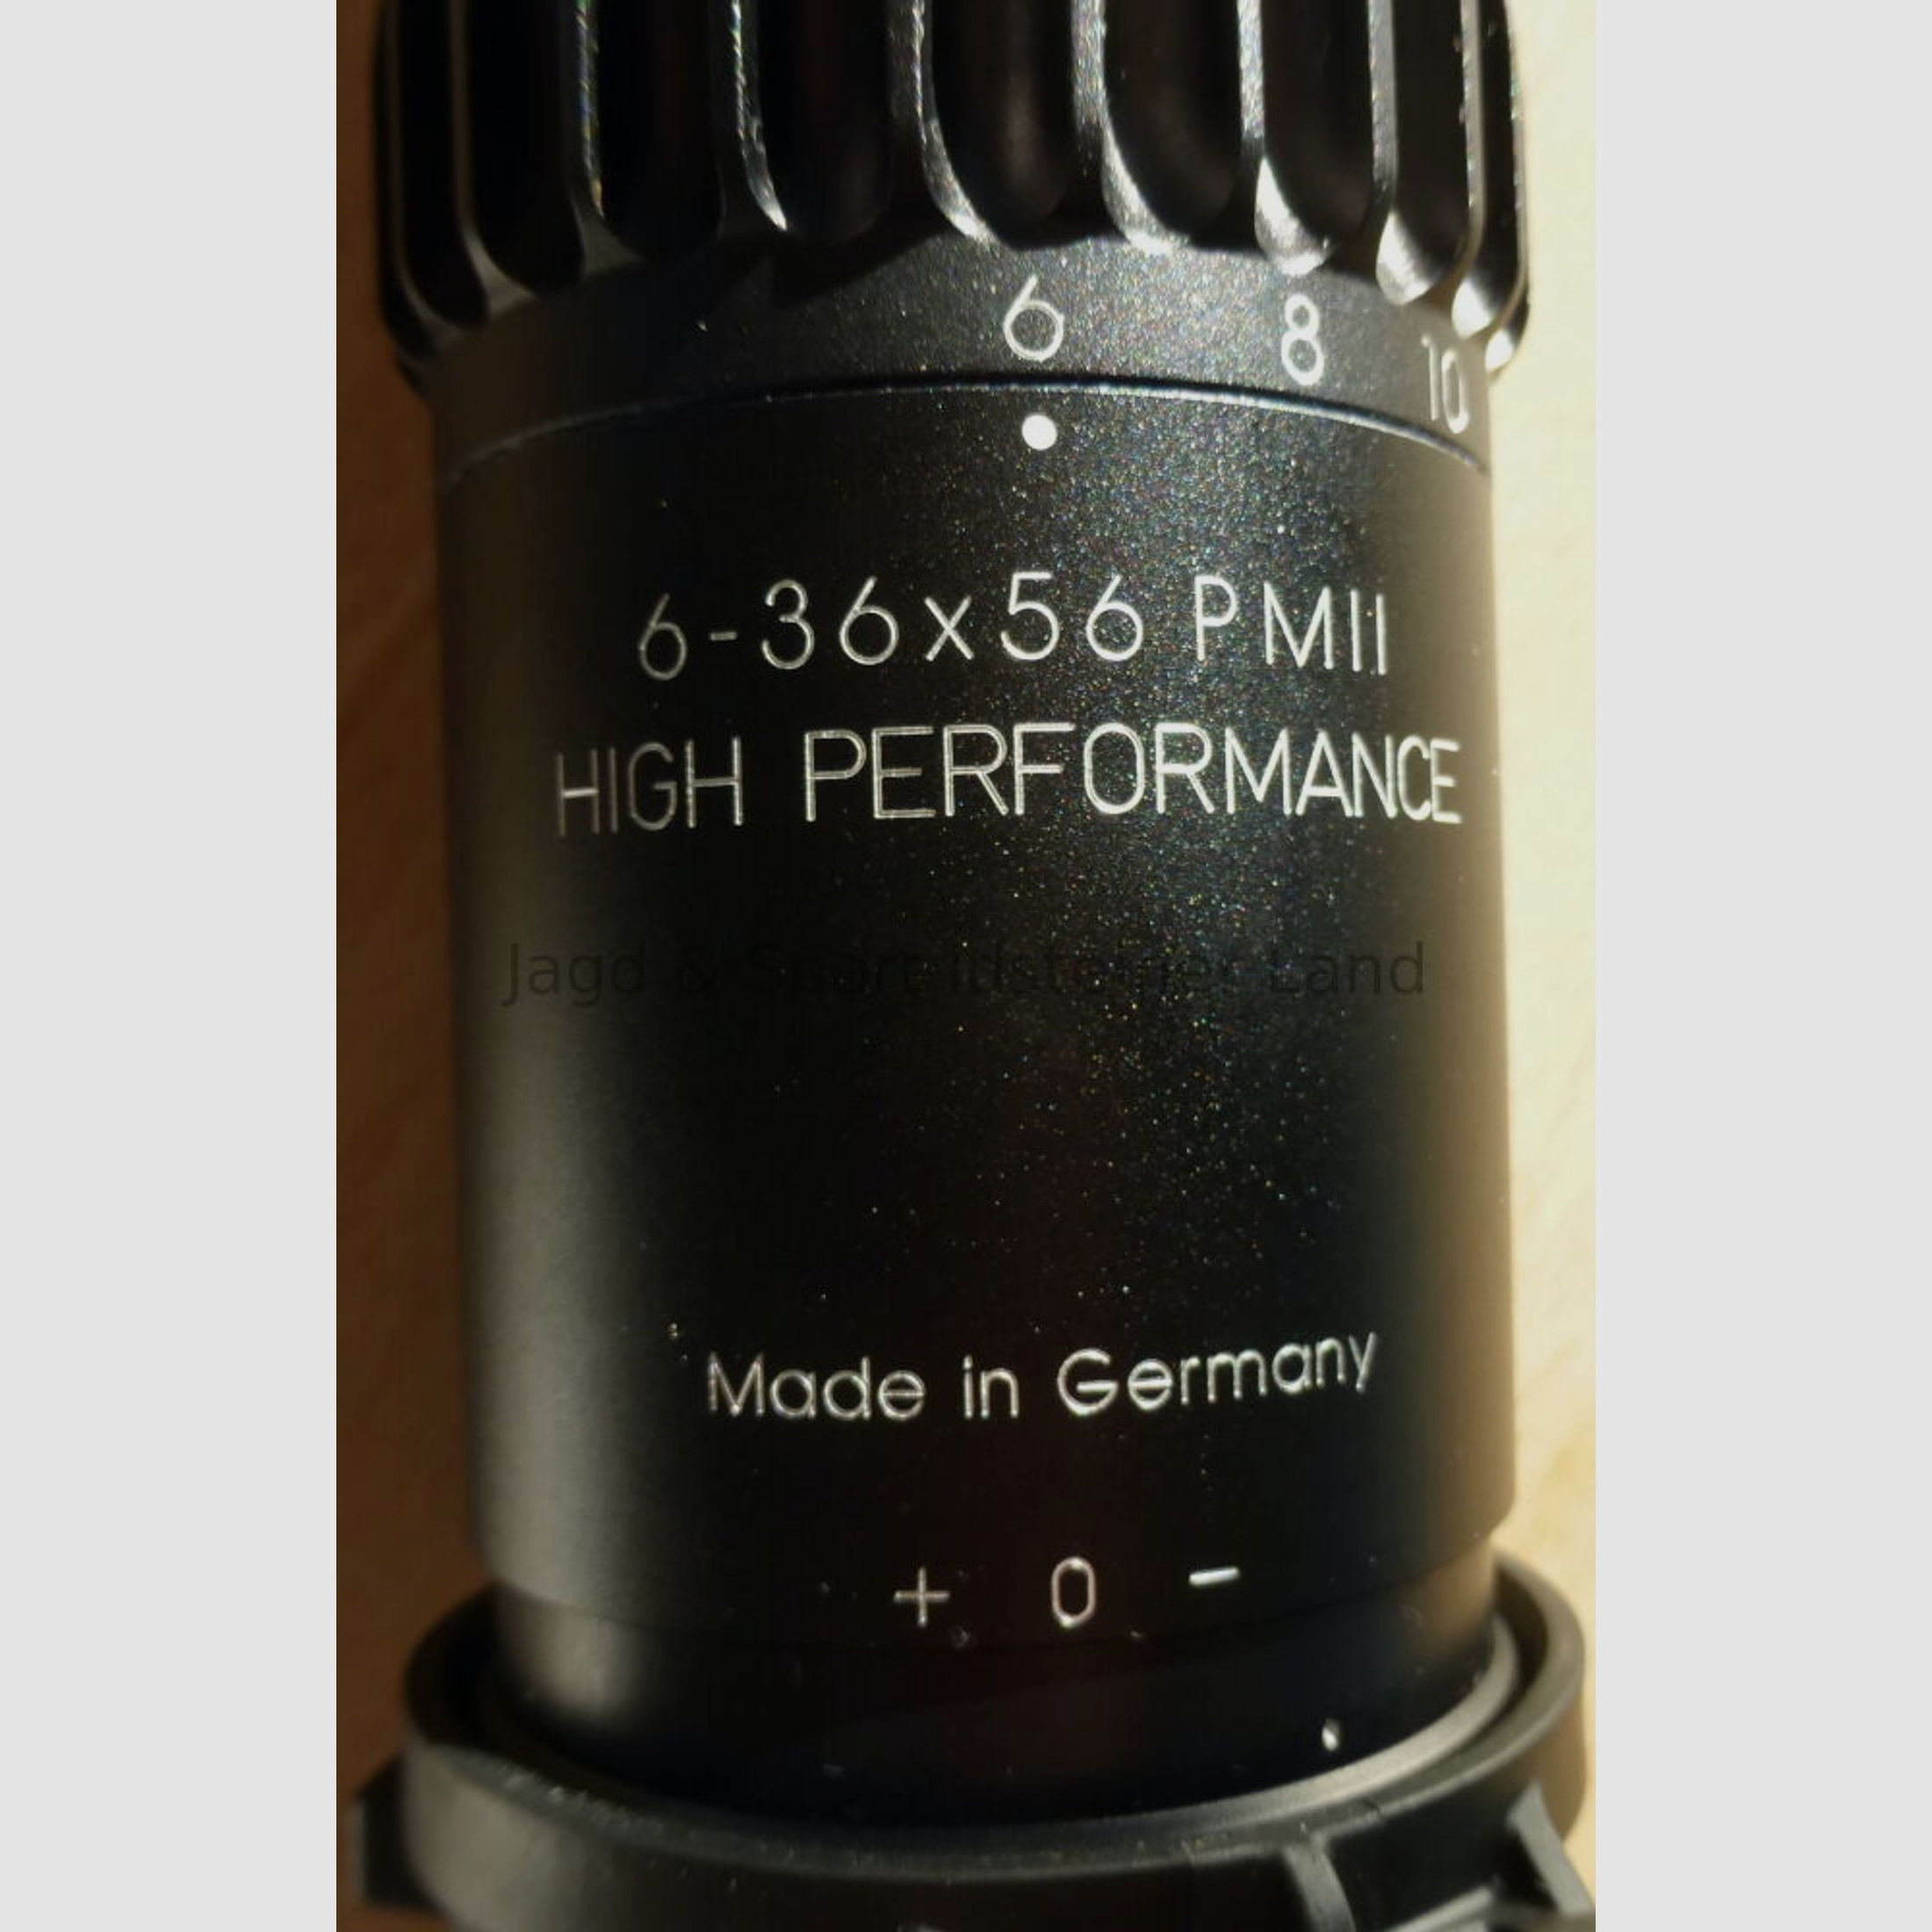 Schmidt-Bender	 PM II High Performance, 6-36x56, Abs. P5FL, LP I